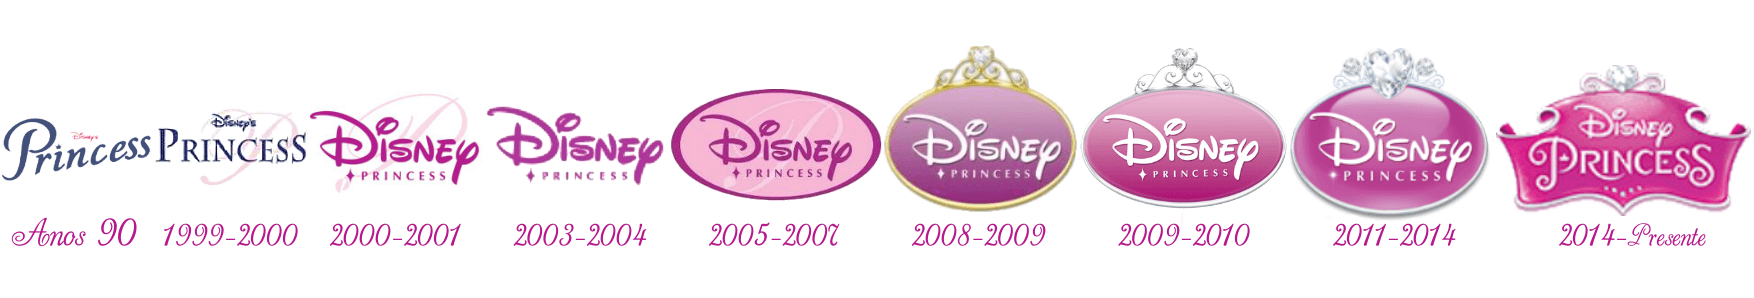 www Disney Princess Logo - Disney princess logo png 6 PNG Image